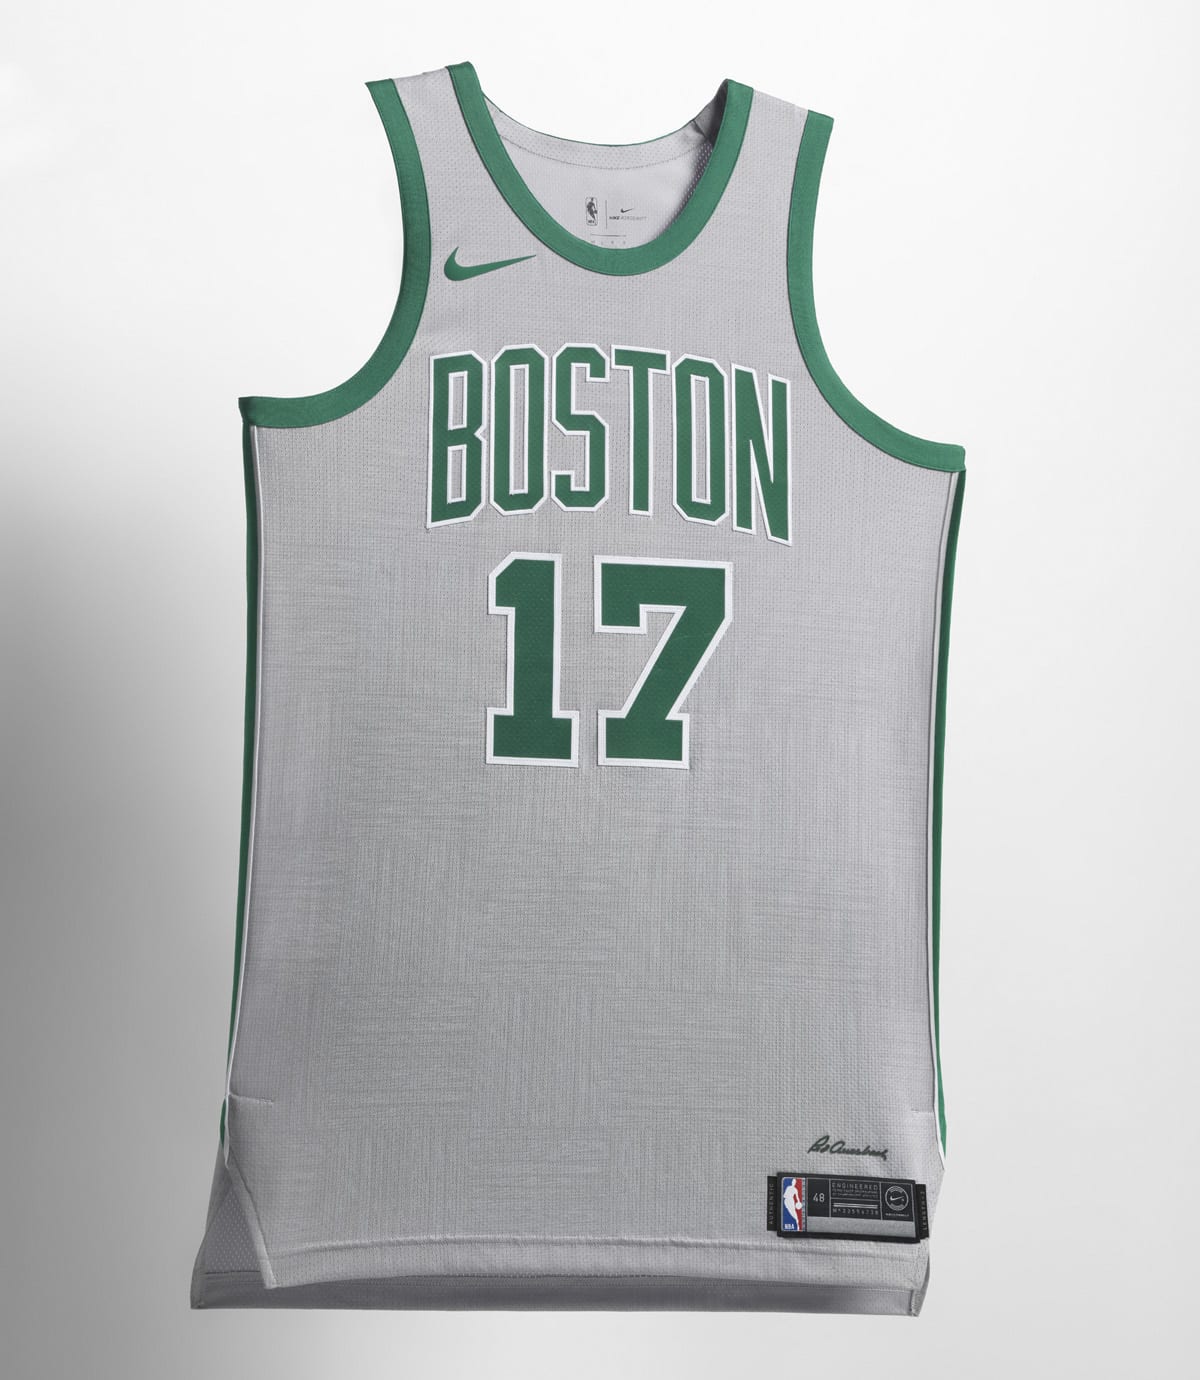 Boston Celtics - Nike NBA City Edition Jerseys | Sole ...